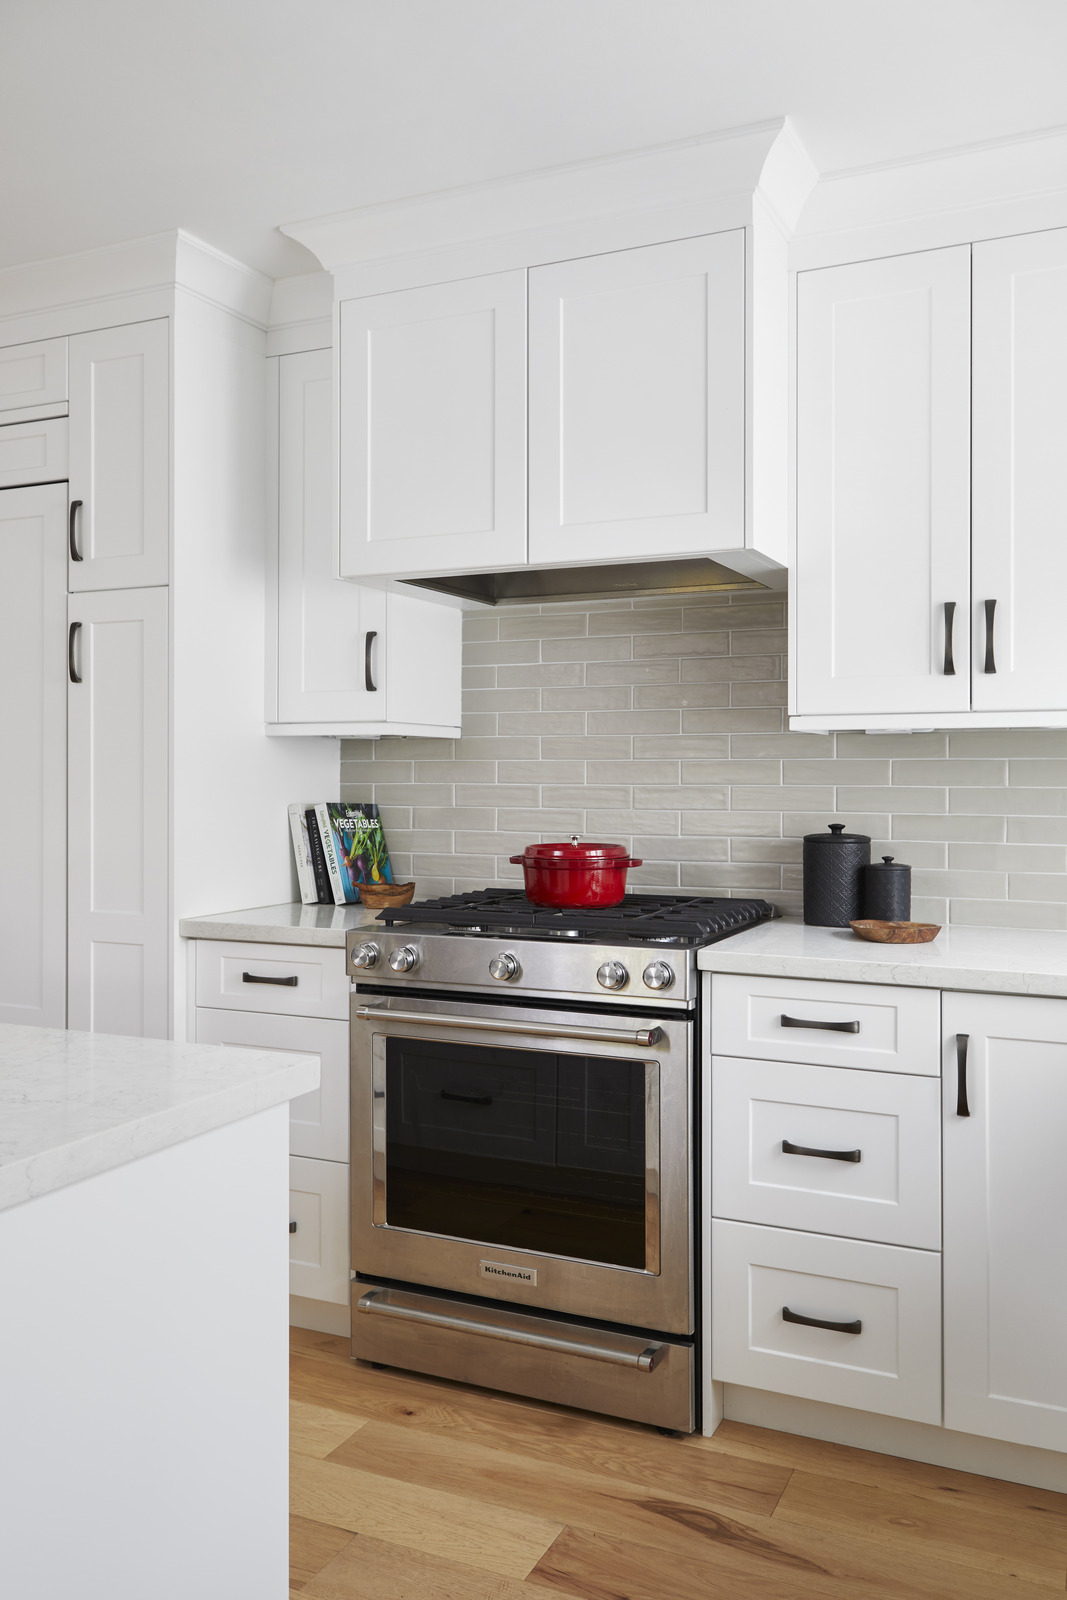 white modern kitchen renovation with gas KitchenAid oven grey tiled backsplash and red pot in Markham